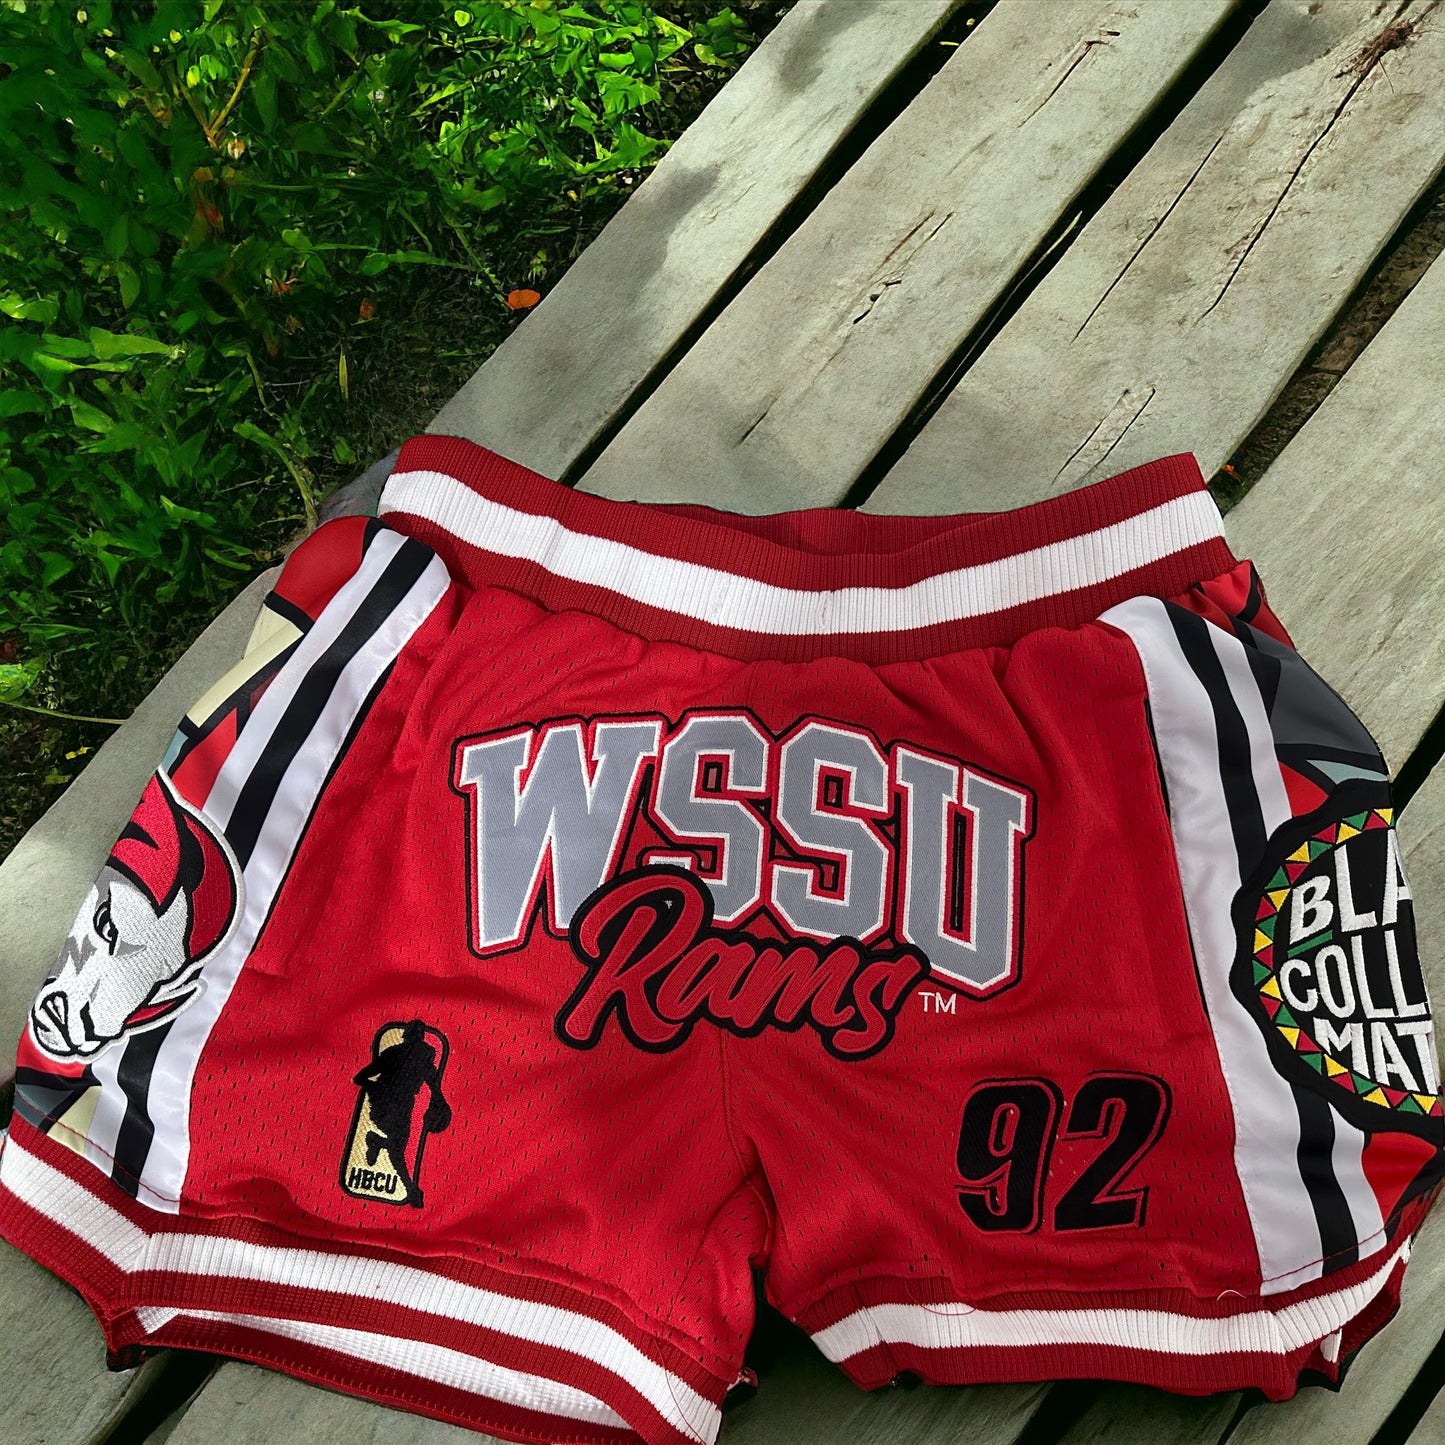 WSSU Rams Lifestyle Basketball Shorts